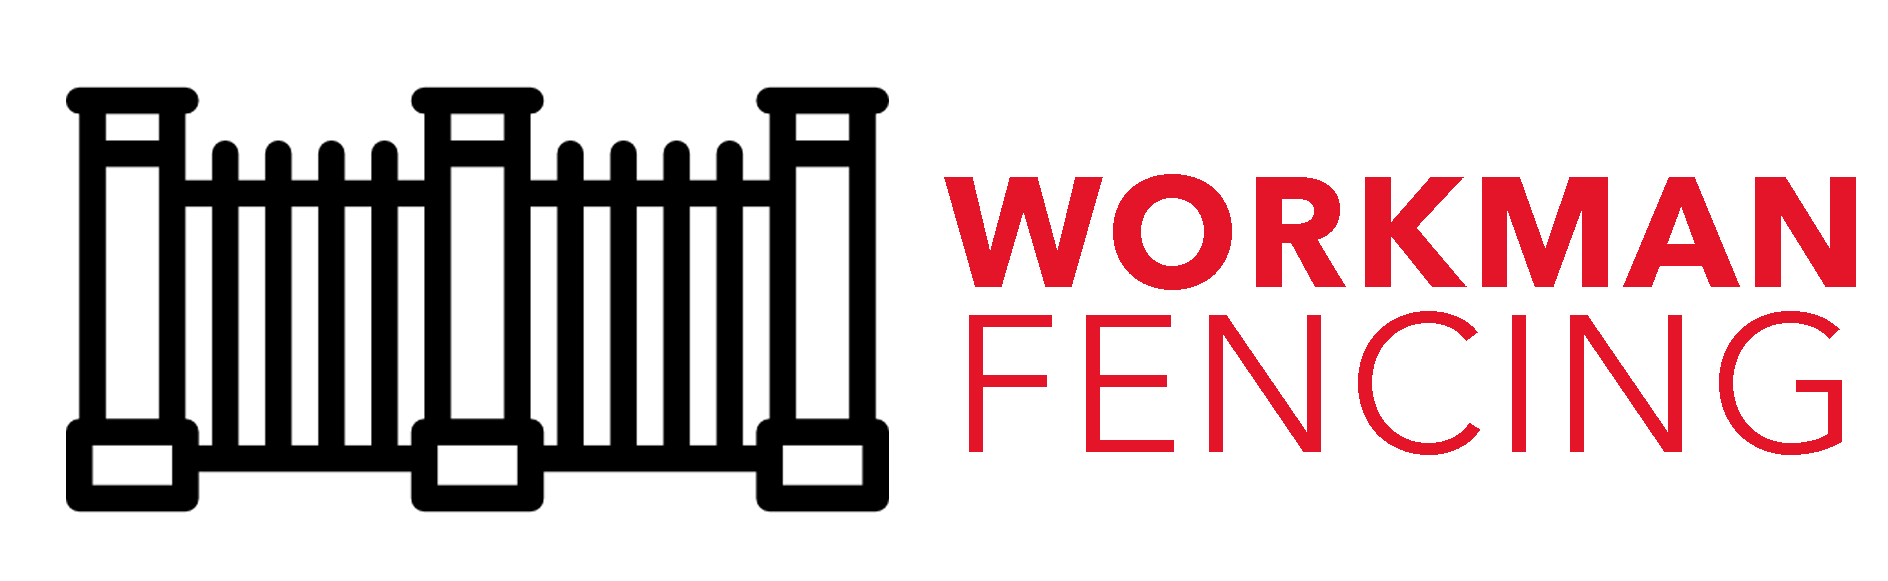 Workman Fencing